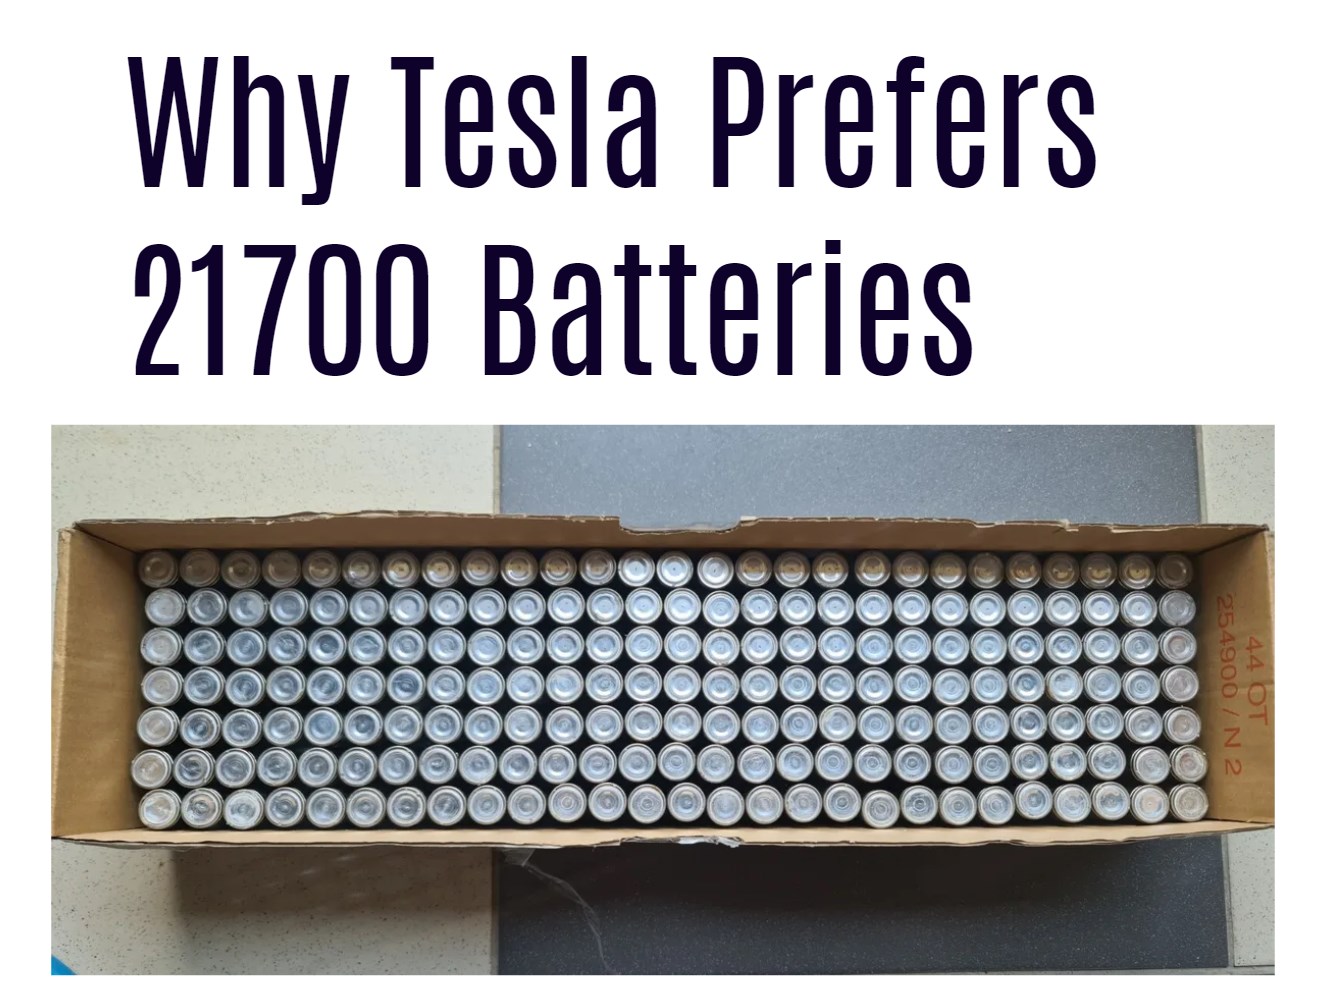 Why Tesla Prefers 21700 Batteries